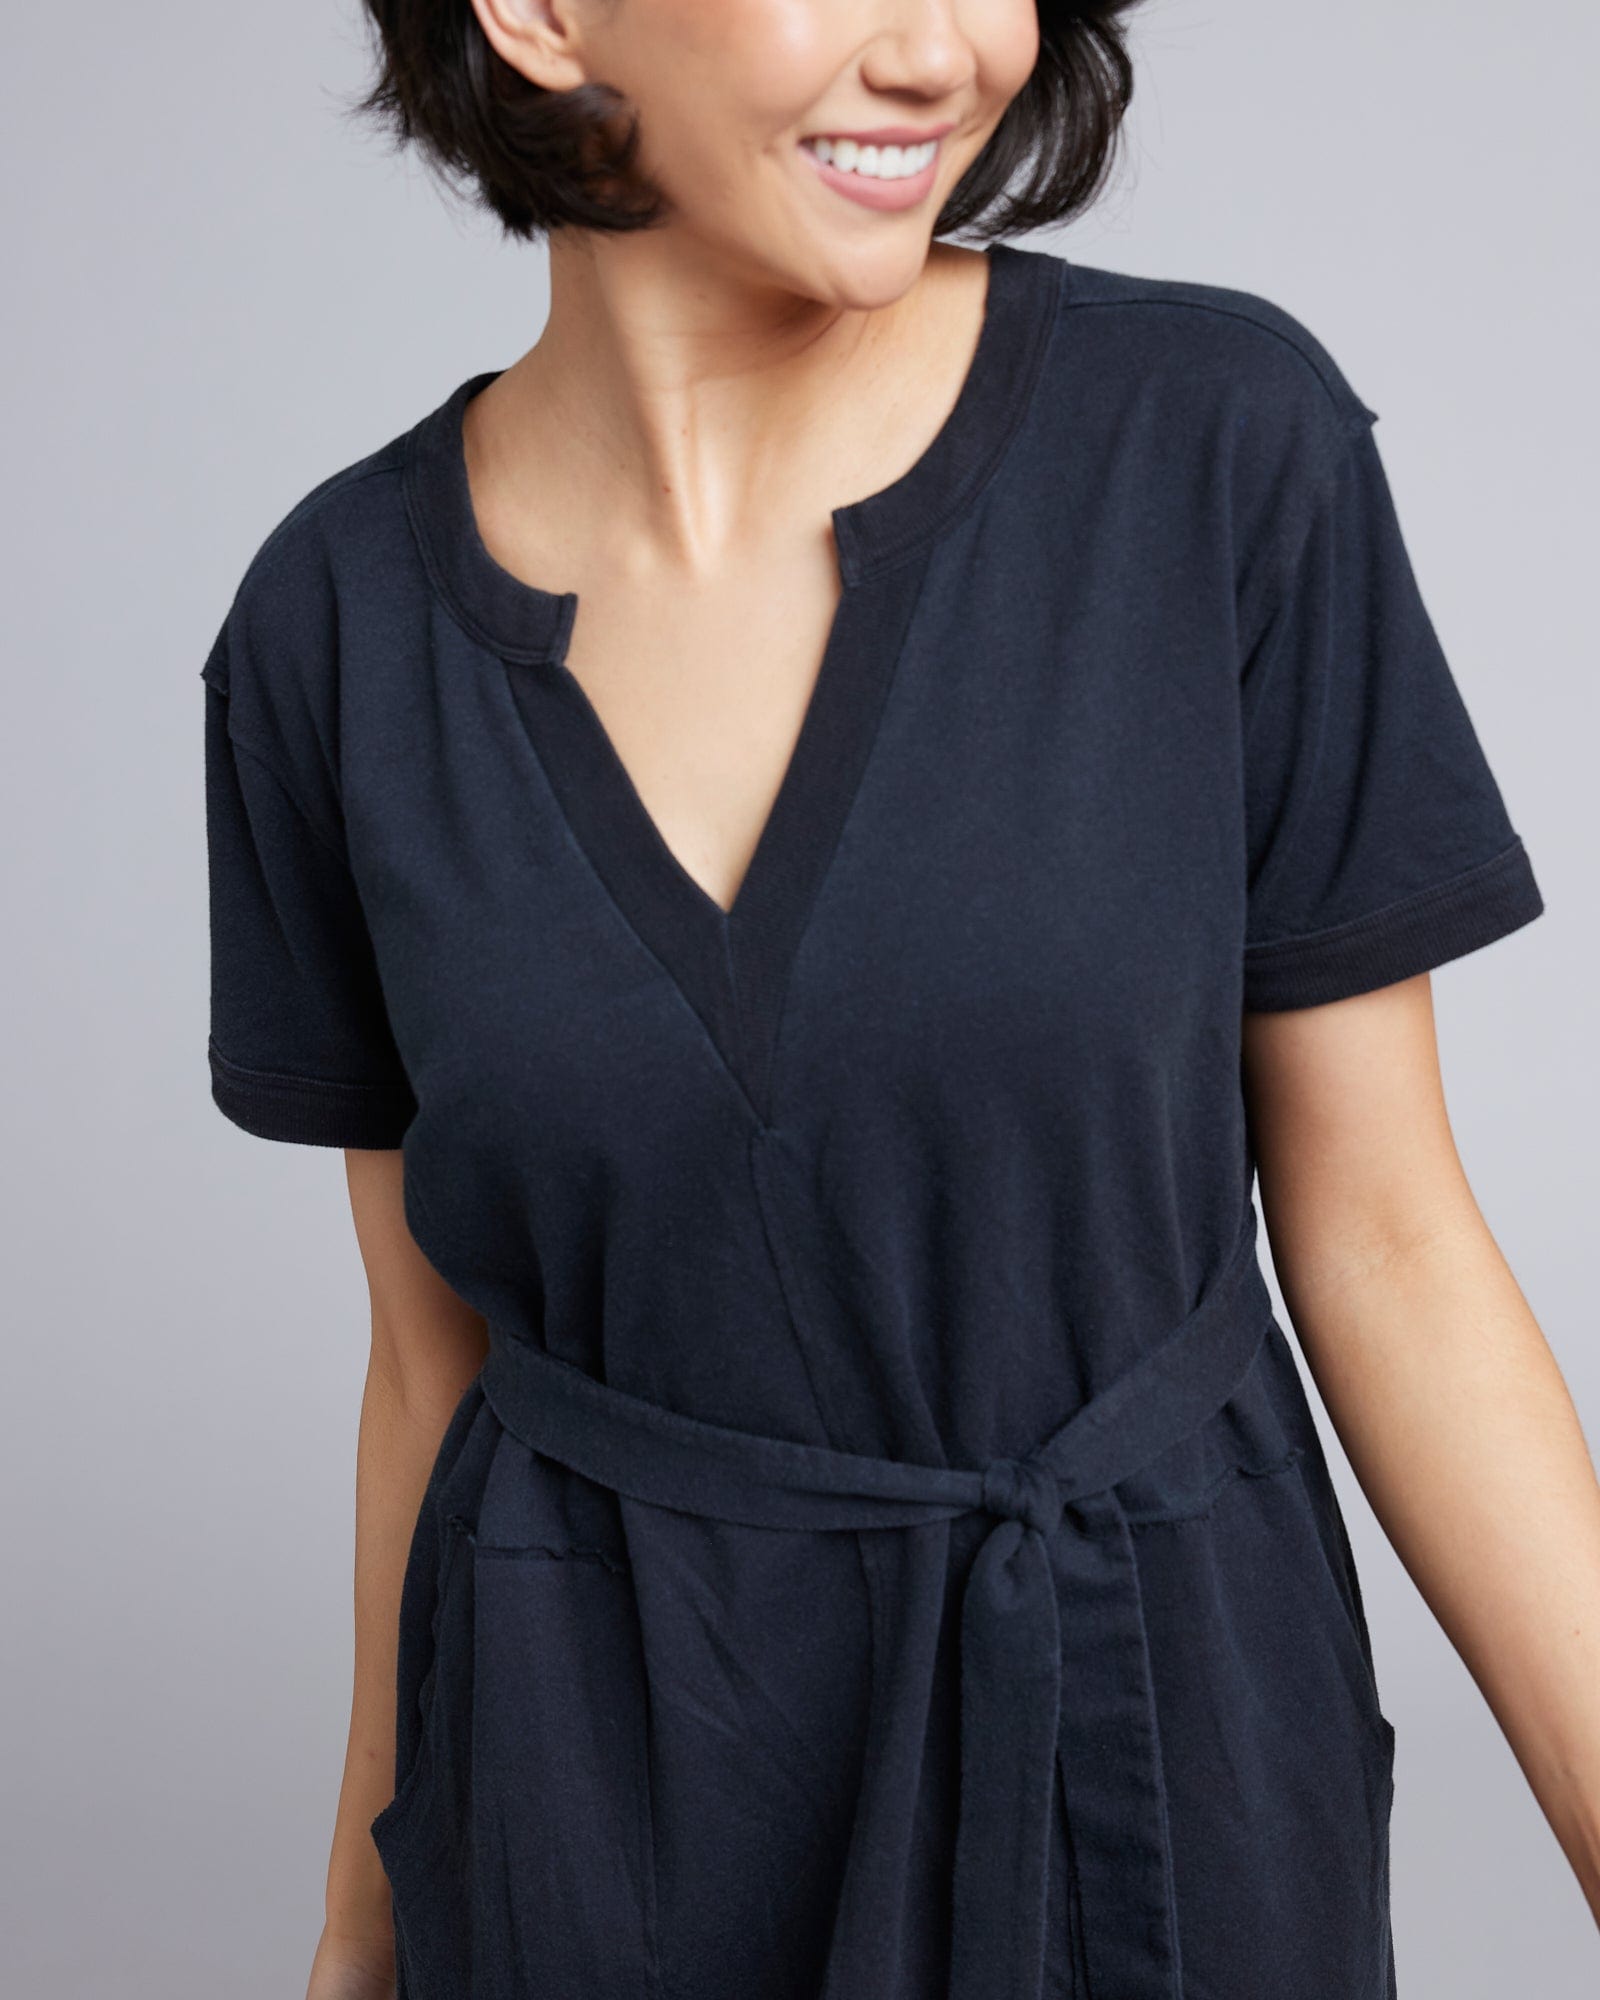 Woman in a short sleeve, knee-length, v-neck black dress